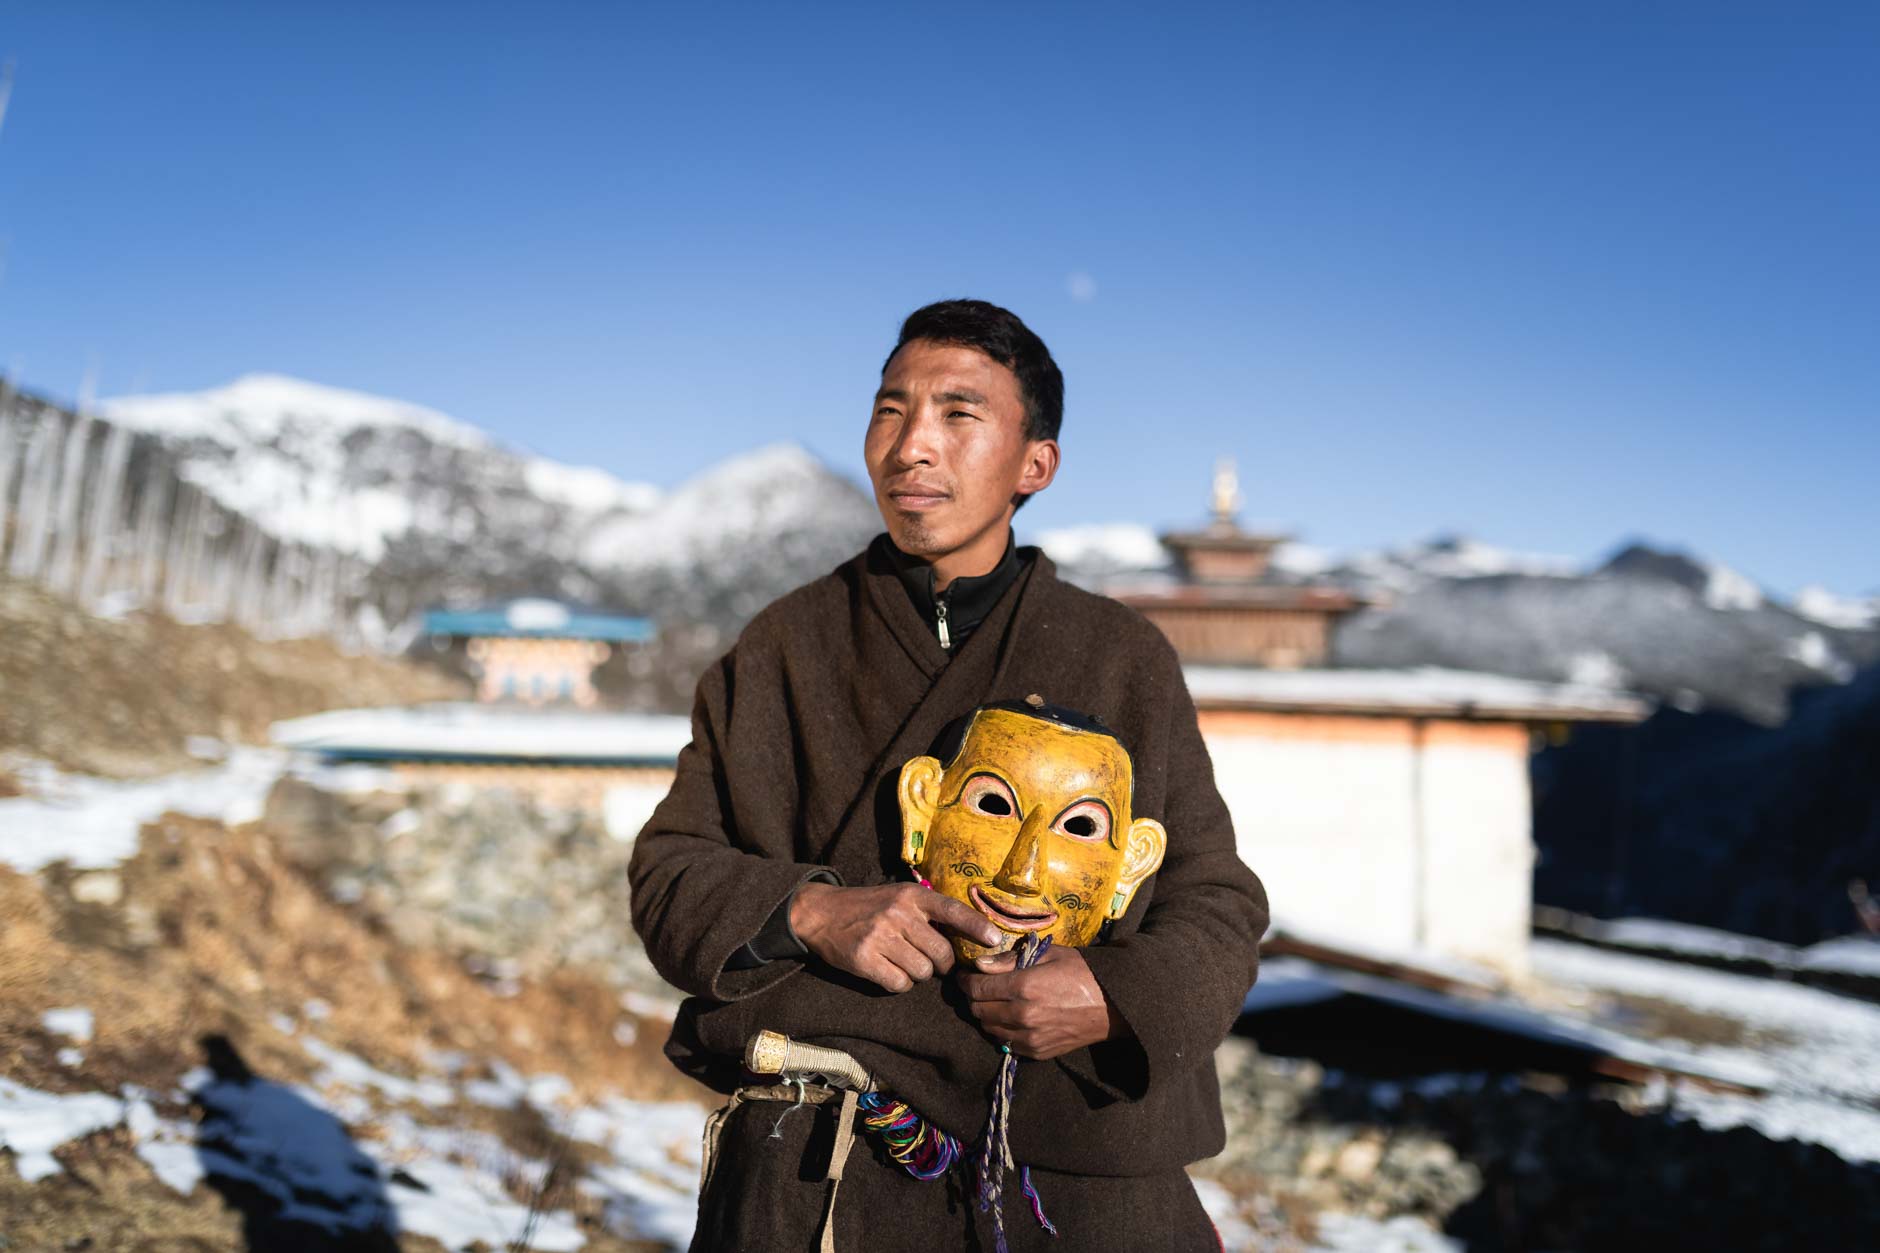 Portrait photography of a Brokpa Tribesman yak dancer in Merak, Bhutan